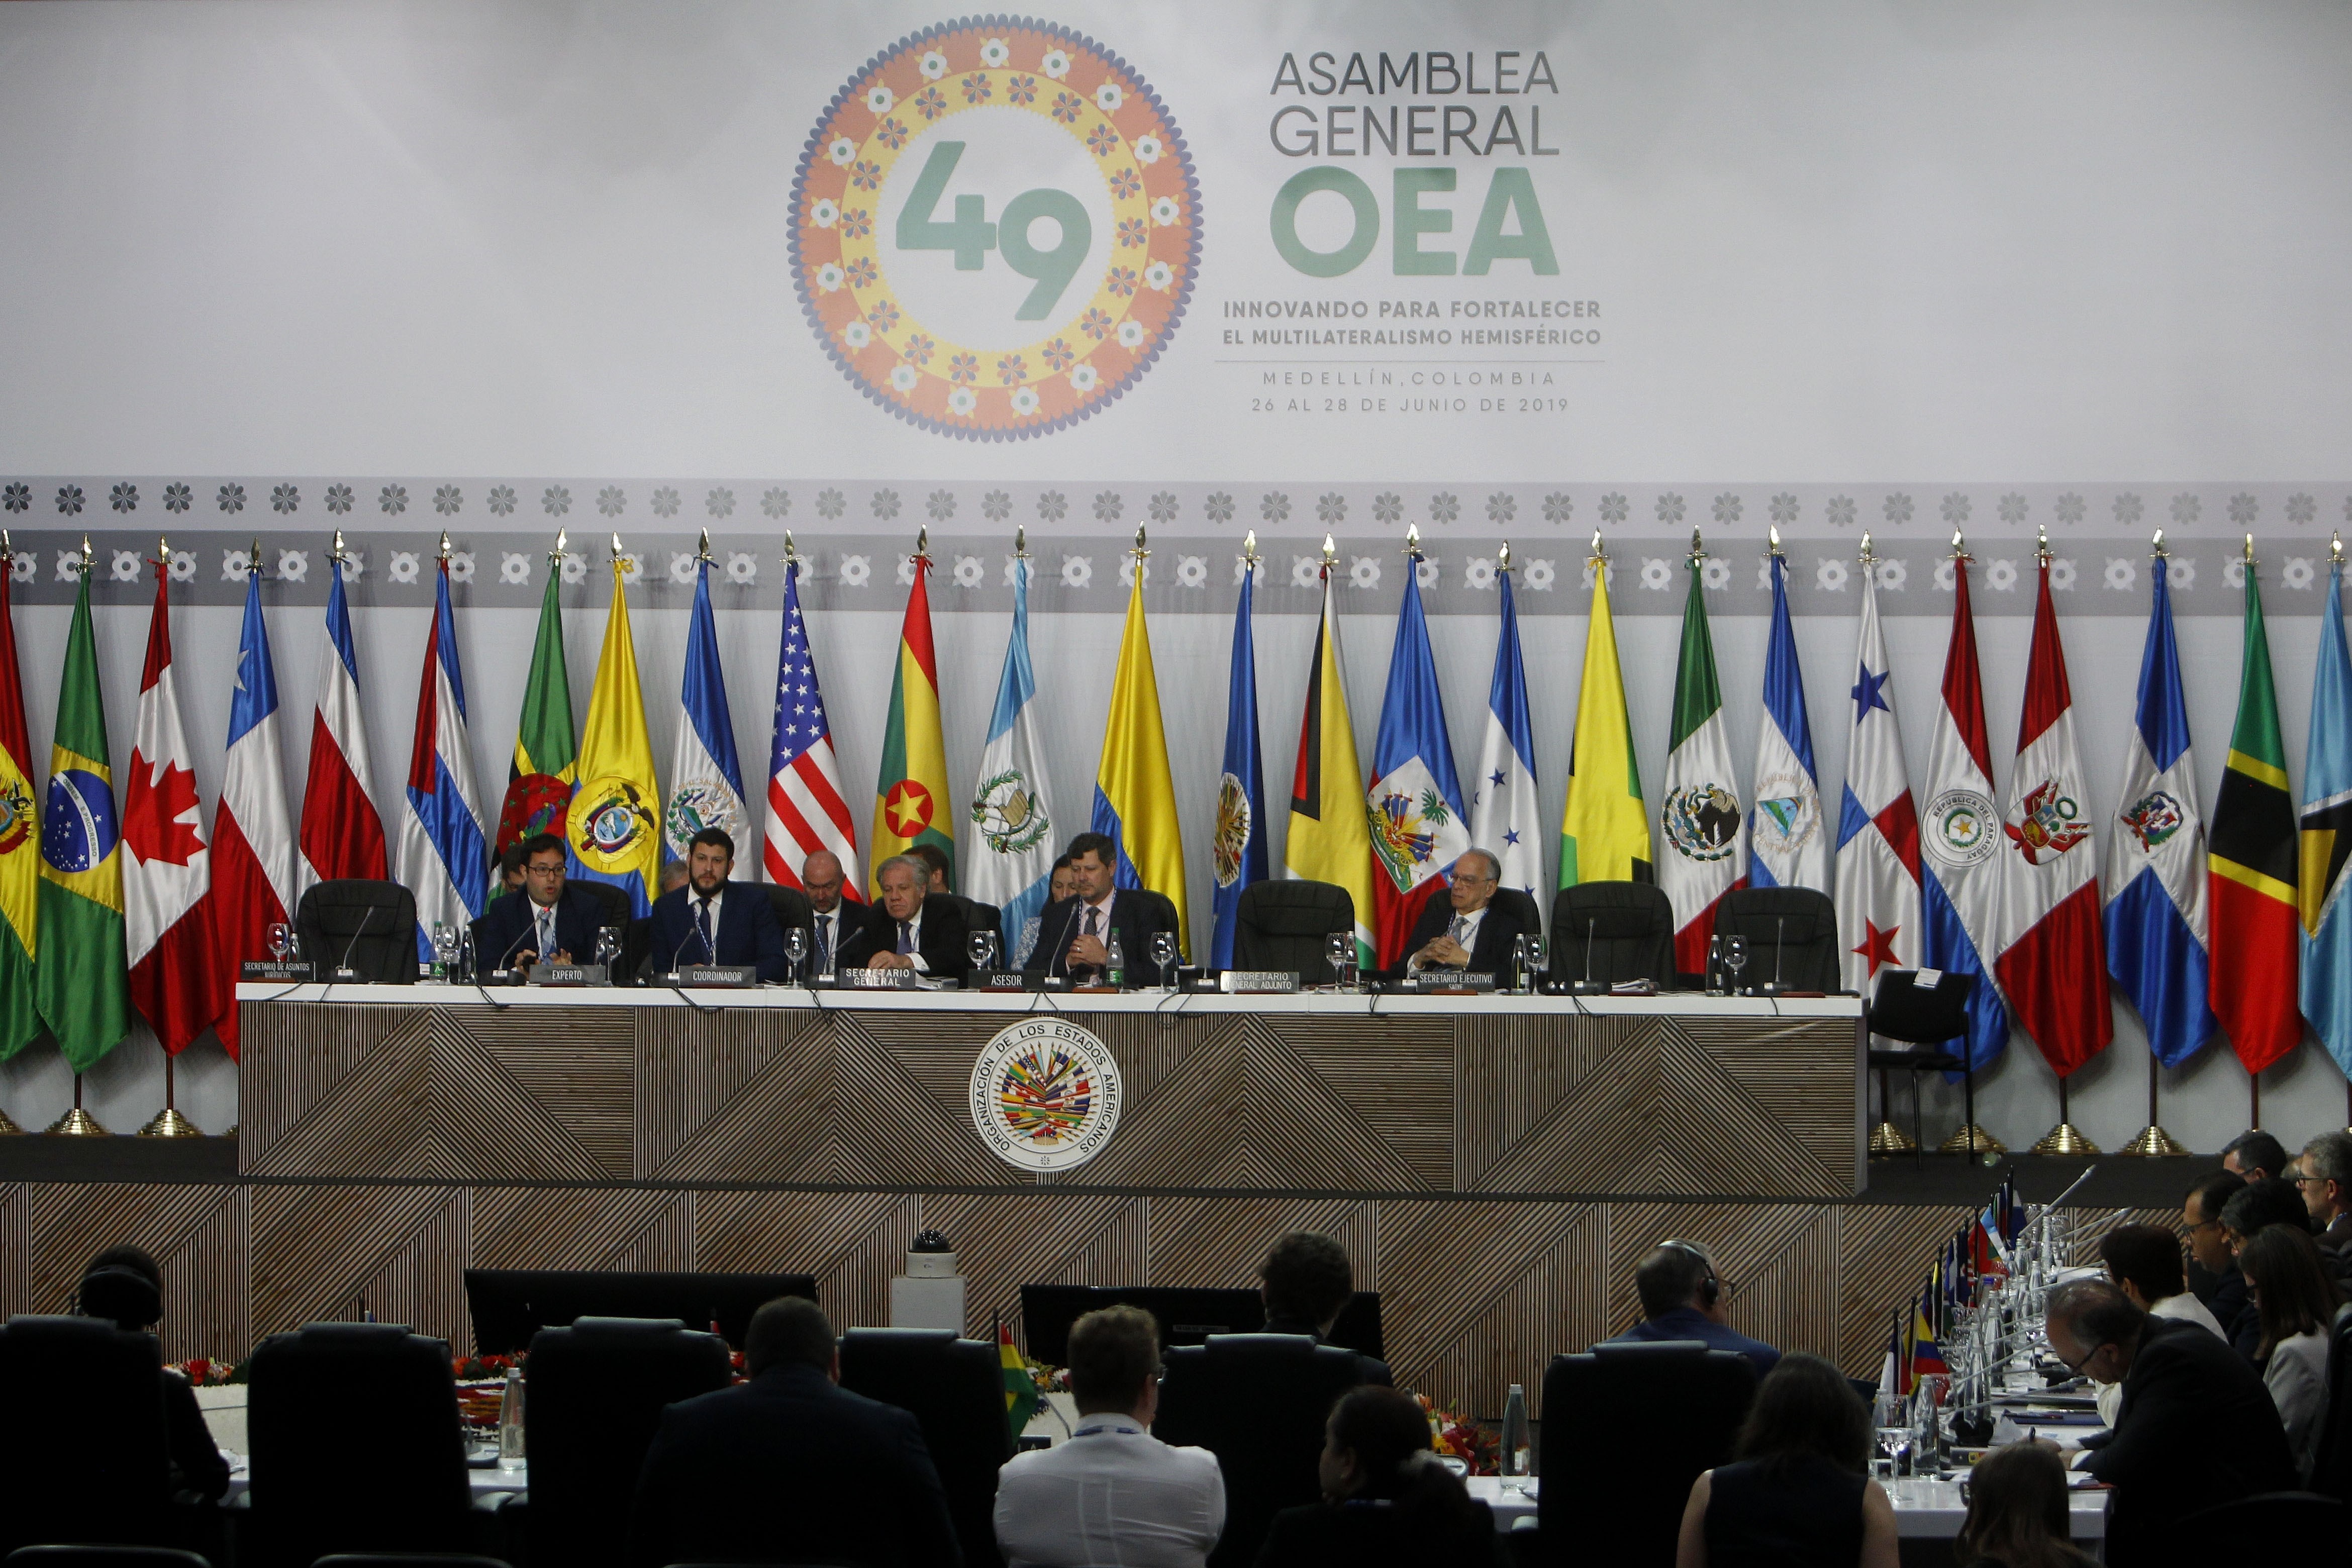  Asamblea General de la OEA de 2019 (Foto de archivo)